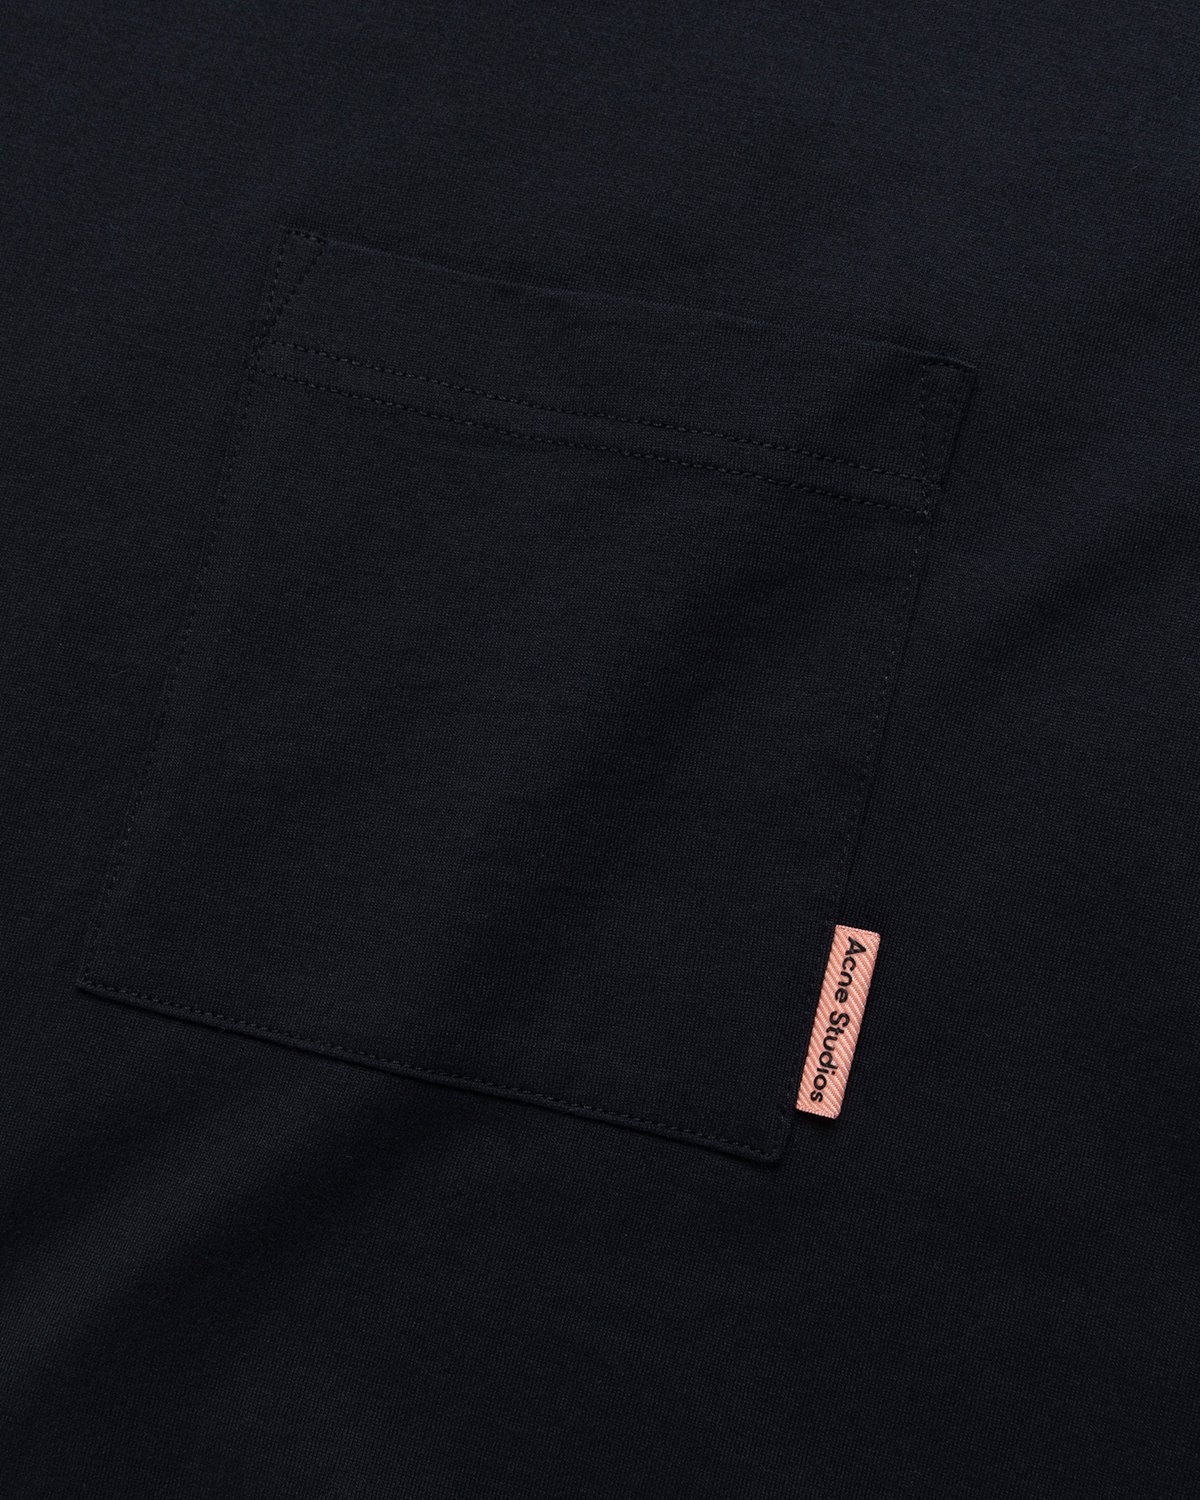 Acne Studios – Short Sleeve Pocket T-Shirt Black - T-shirts - Black - Image 3